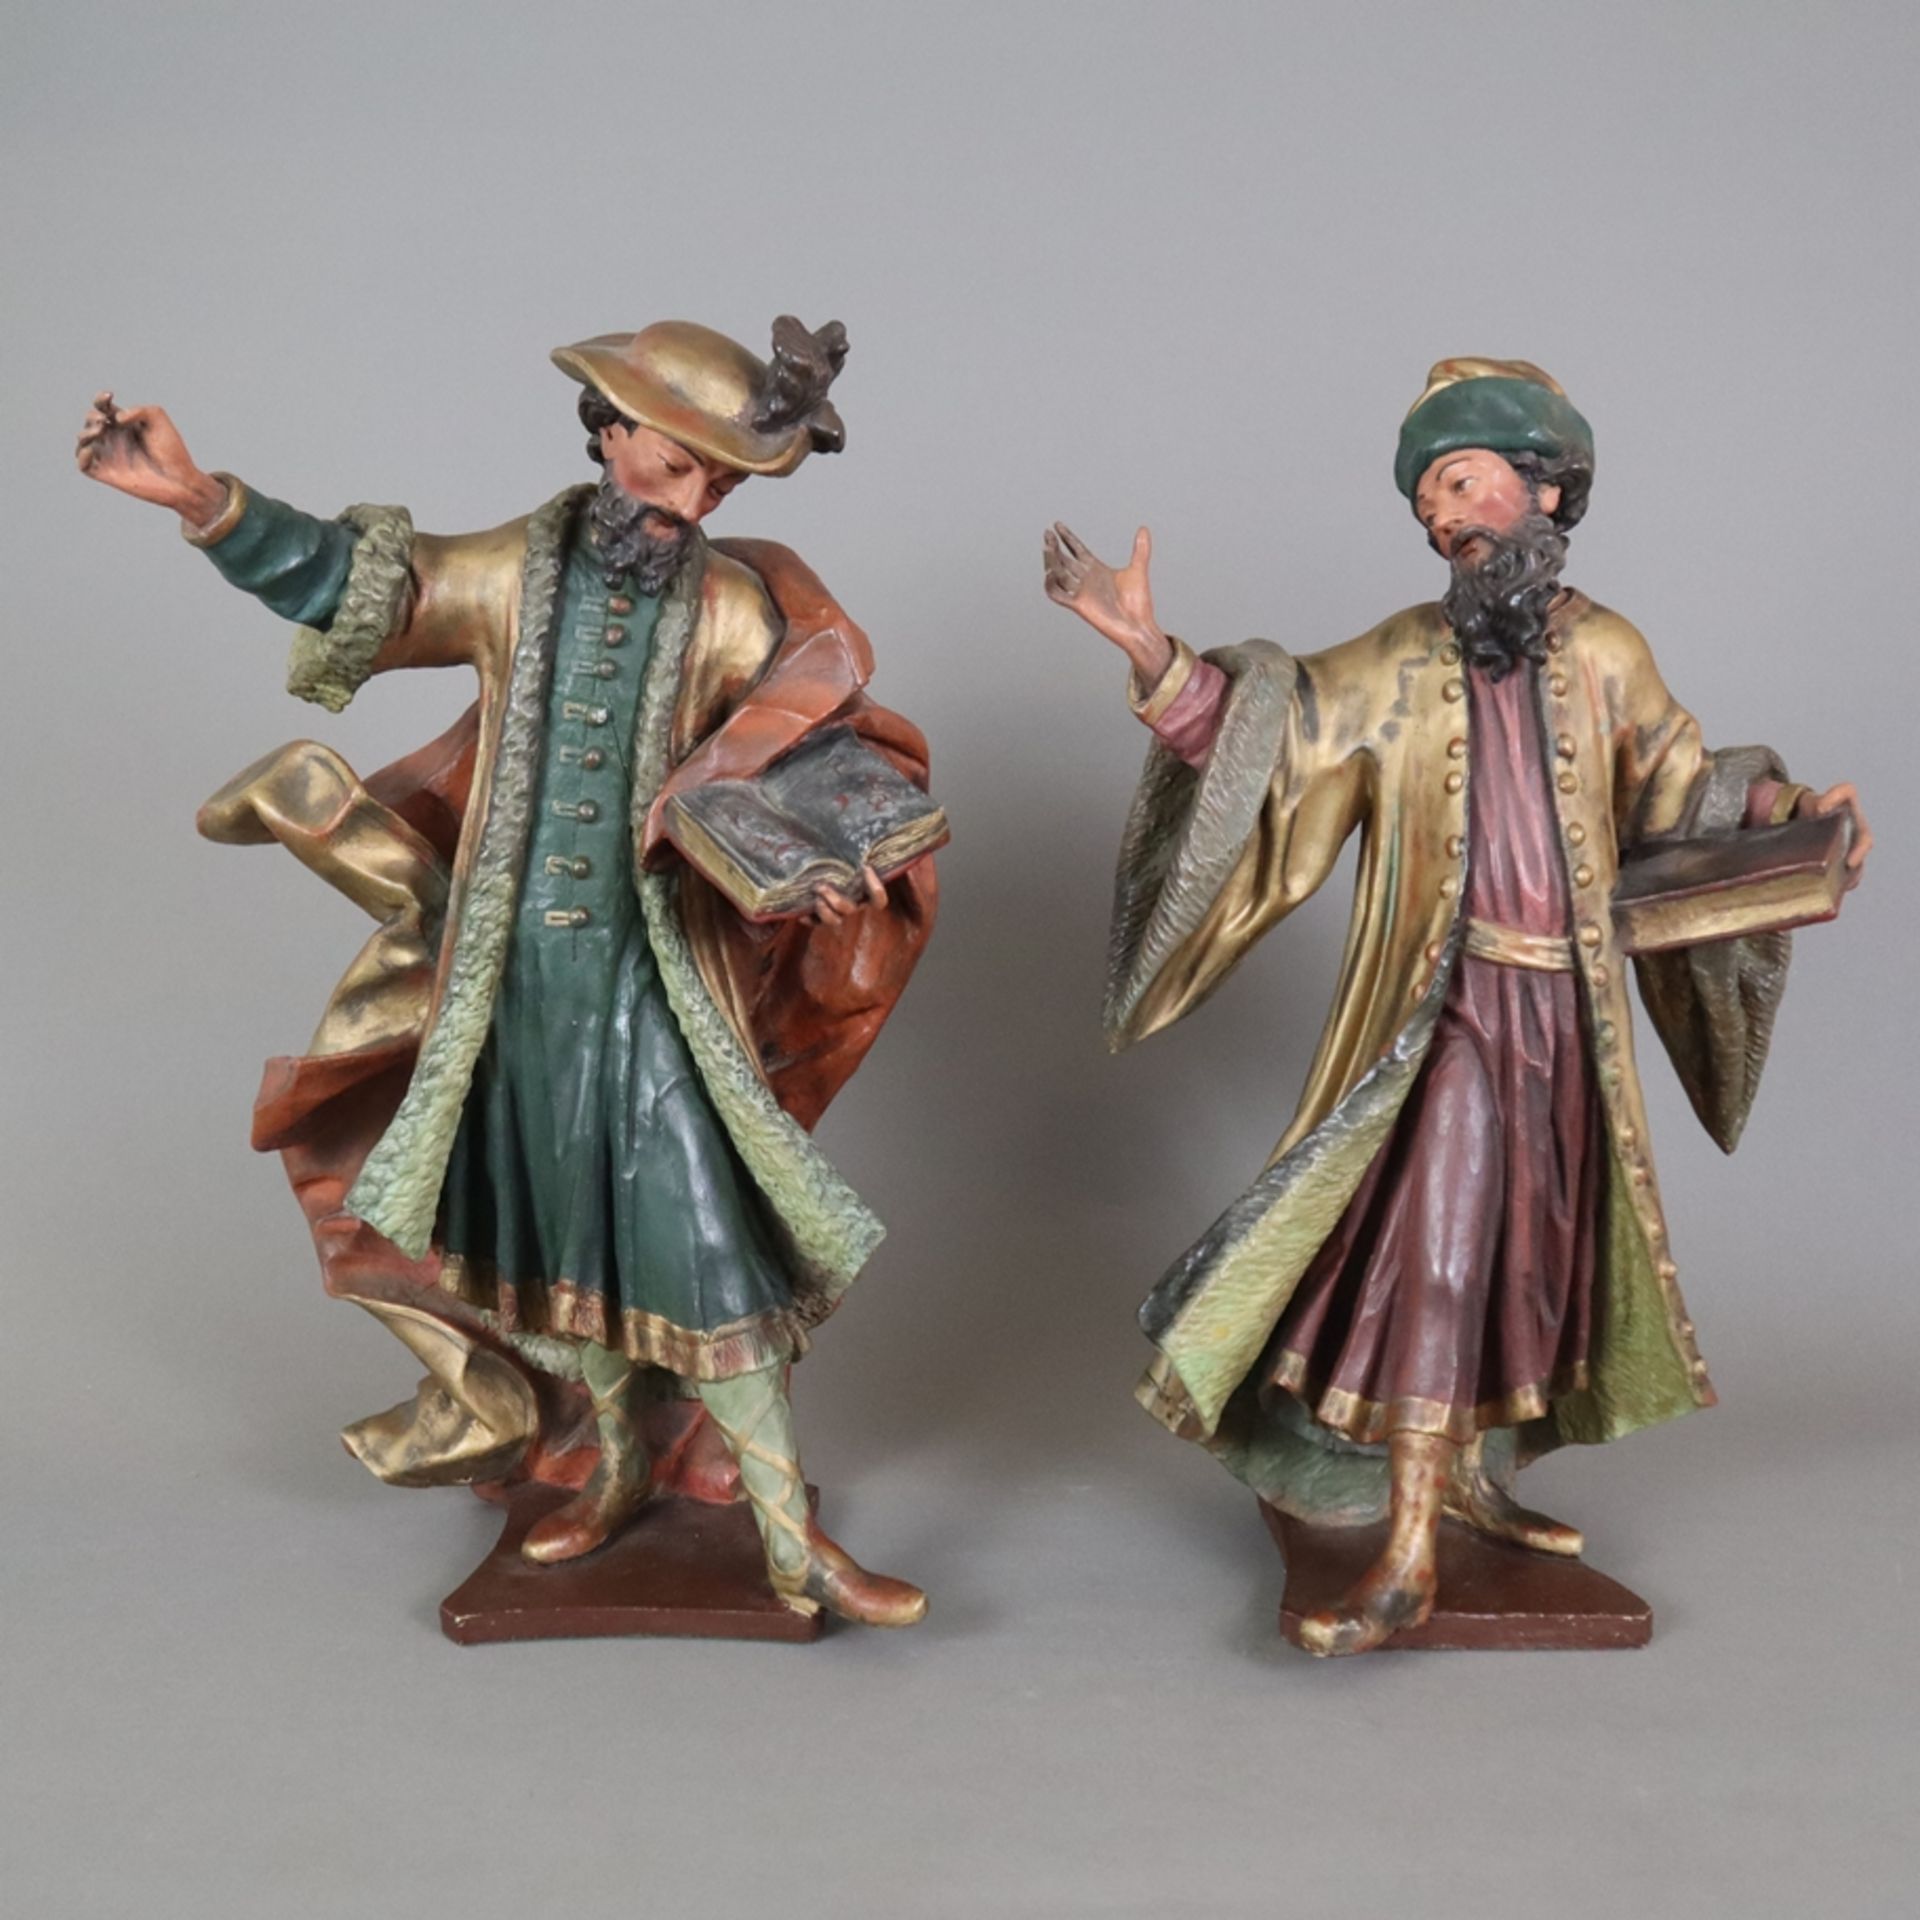 Zwei Figuren "Kosmas und Damian" - 20. Jh., Kunstguss, polychrom gefasst, Museumsreplikate, Darstel